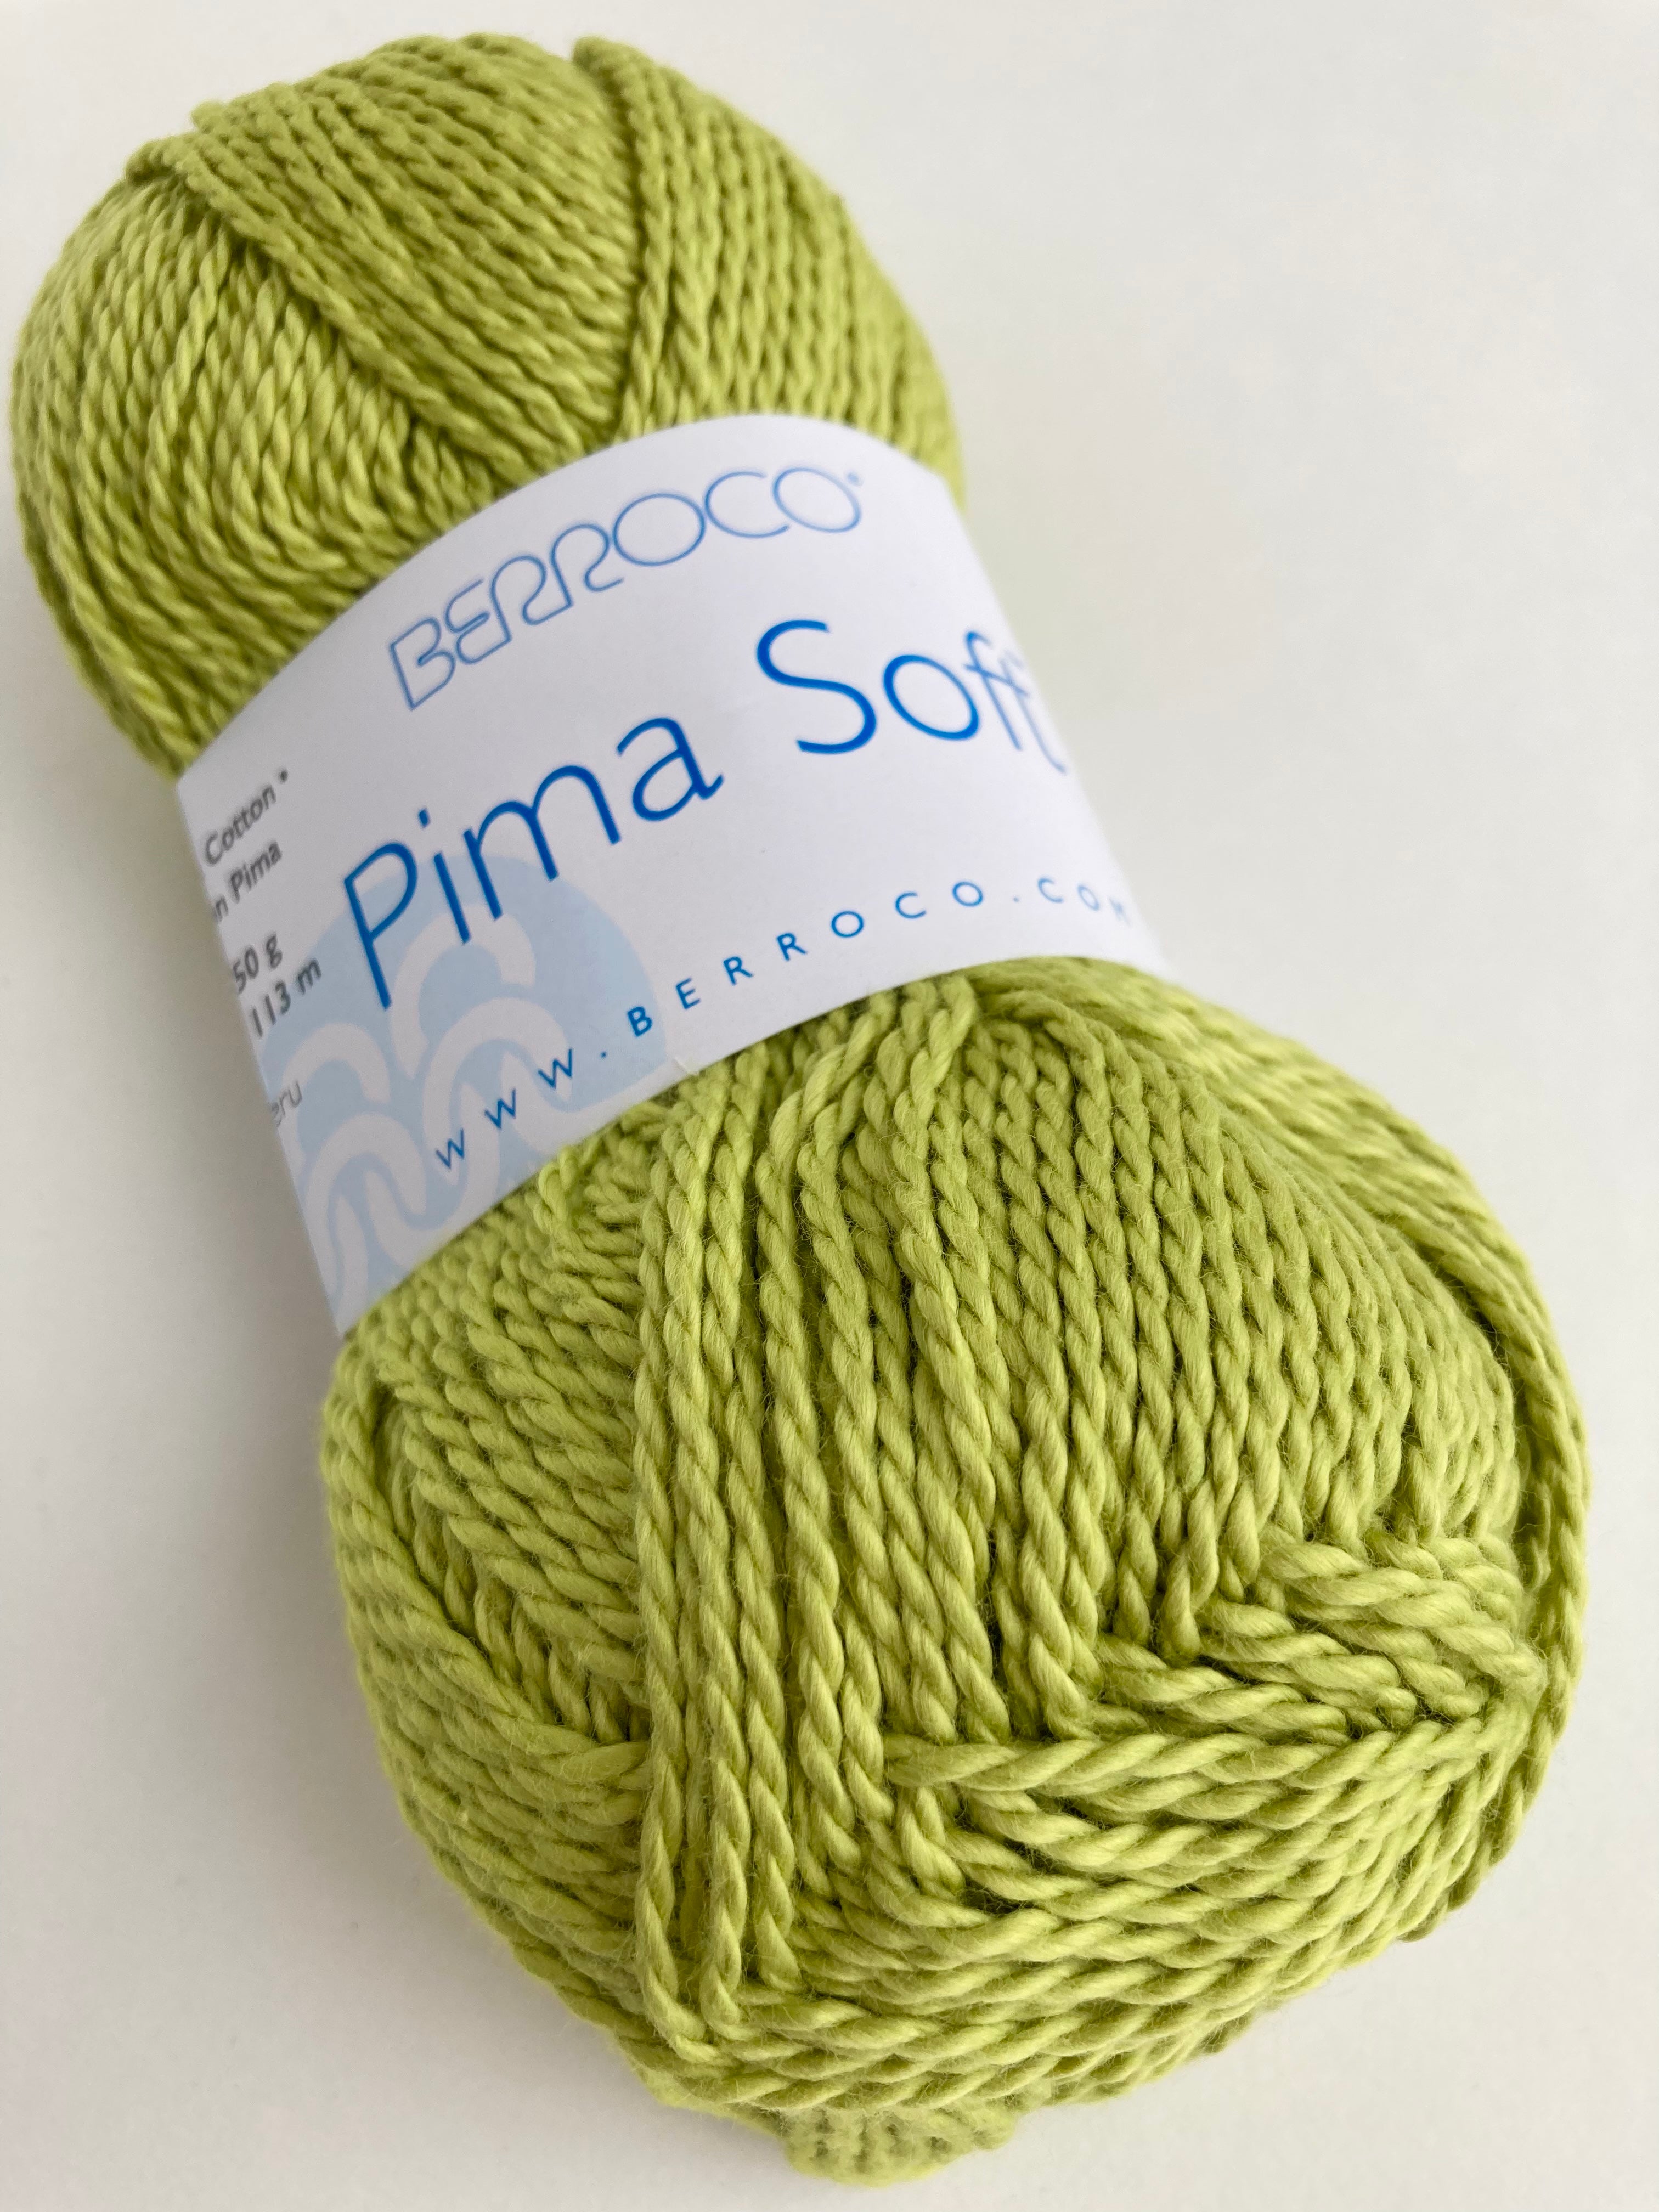 Pear 4638 - Pima Soft from Berroco